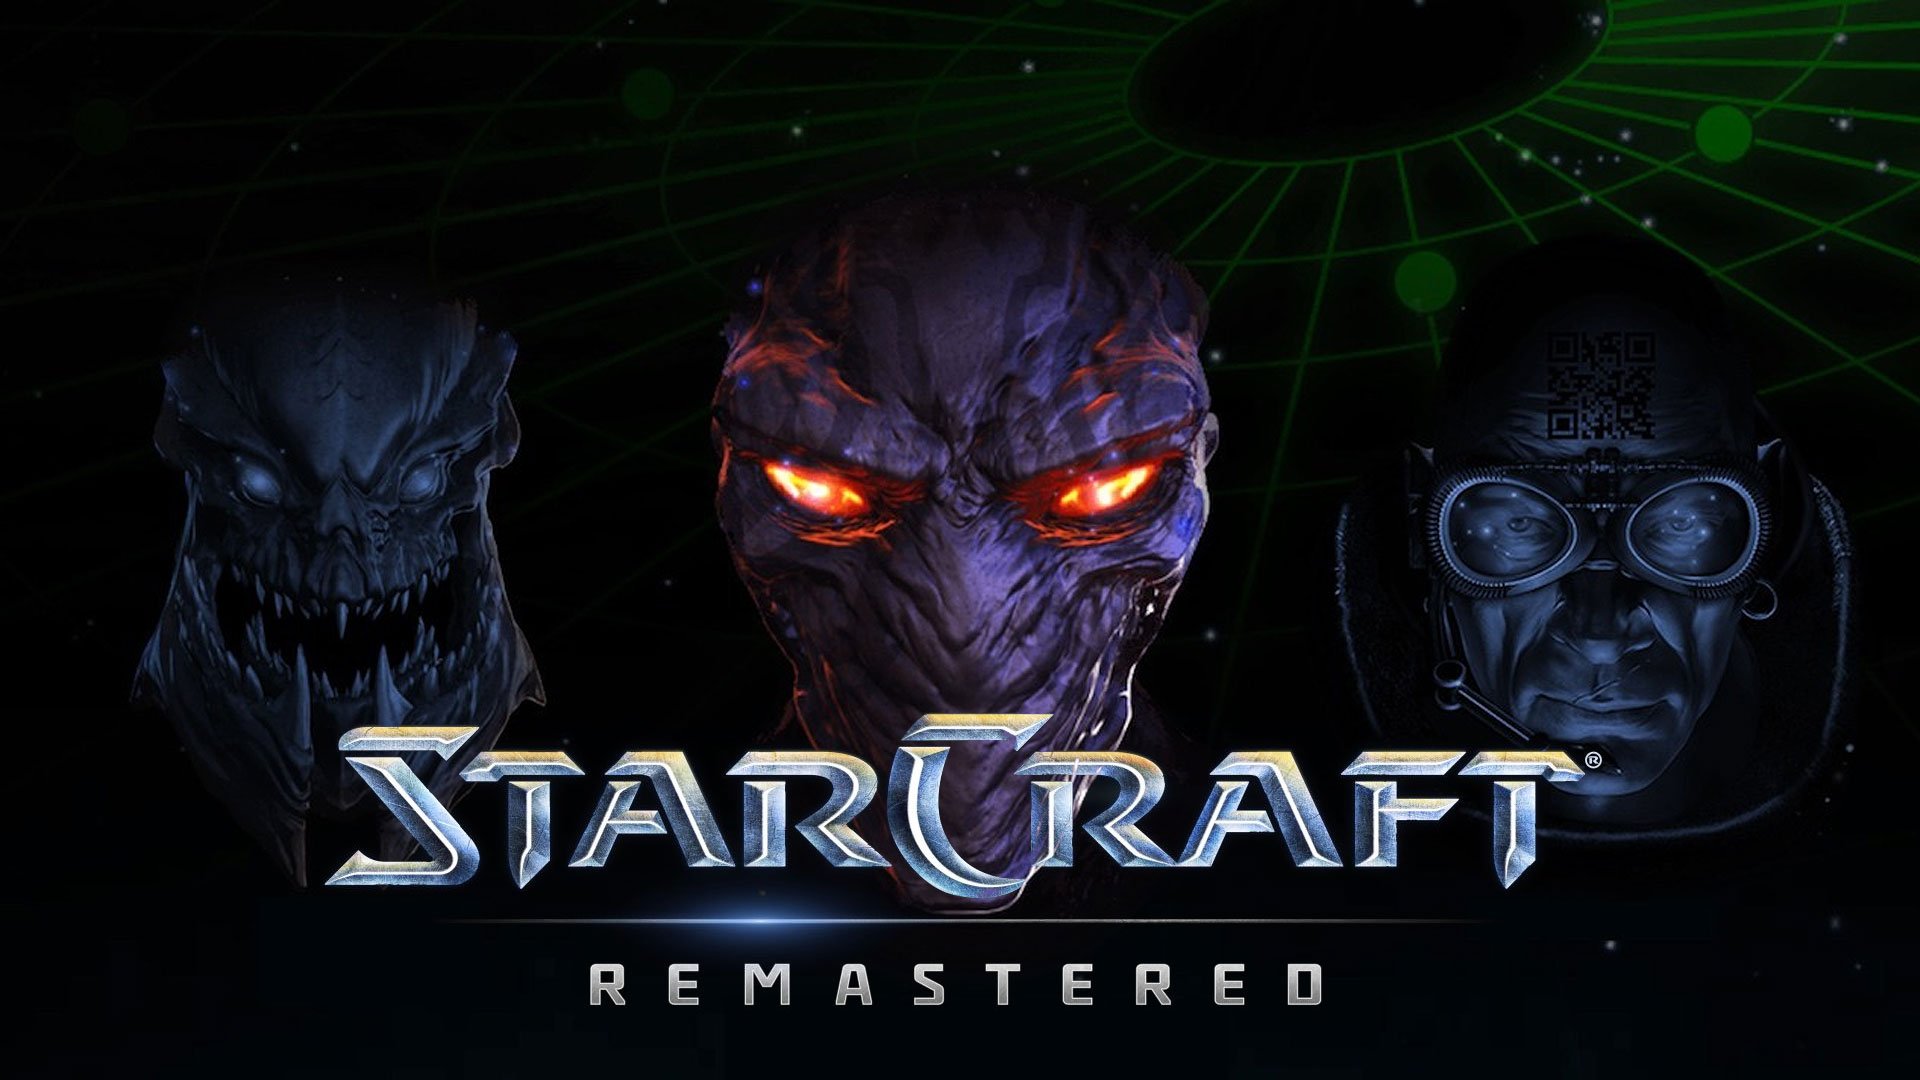 ui skins in starcraft remastered